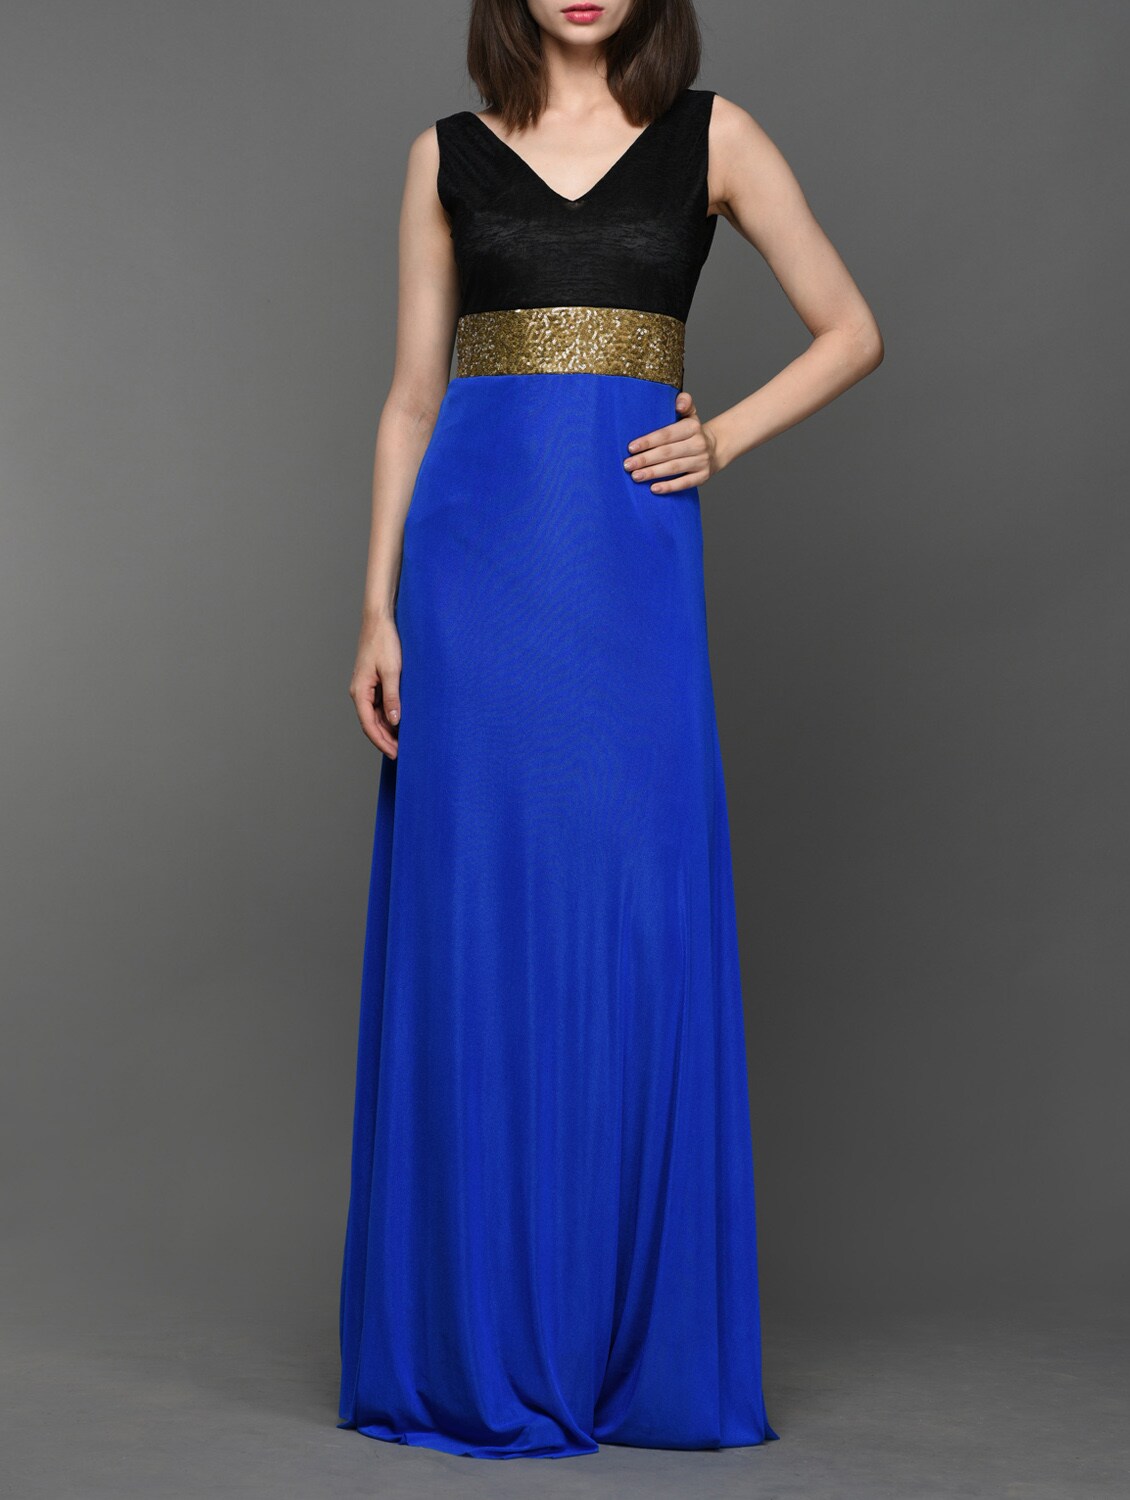 Buy online Royal Blue Sleeveless Maxi Dress from western wear for Women